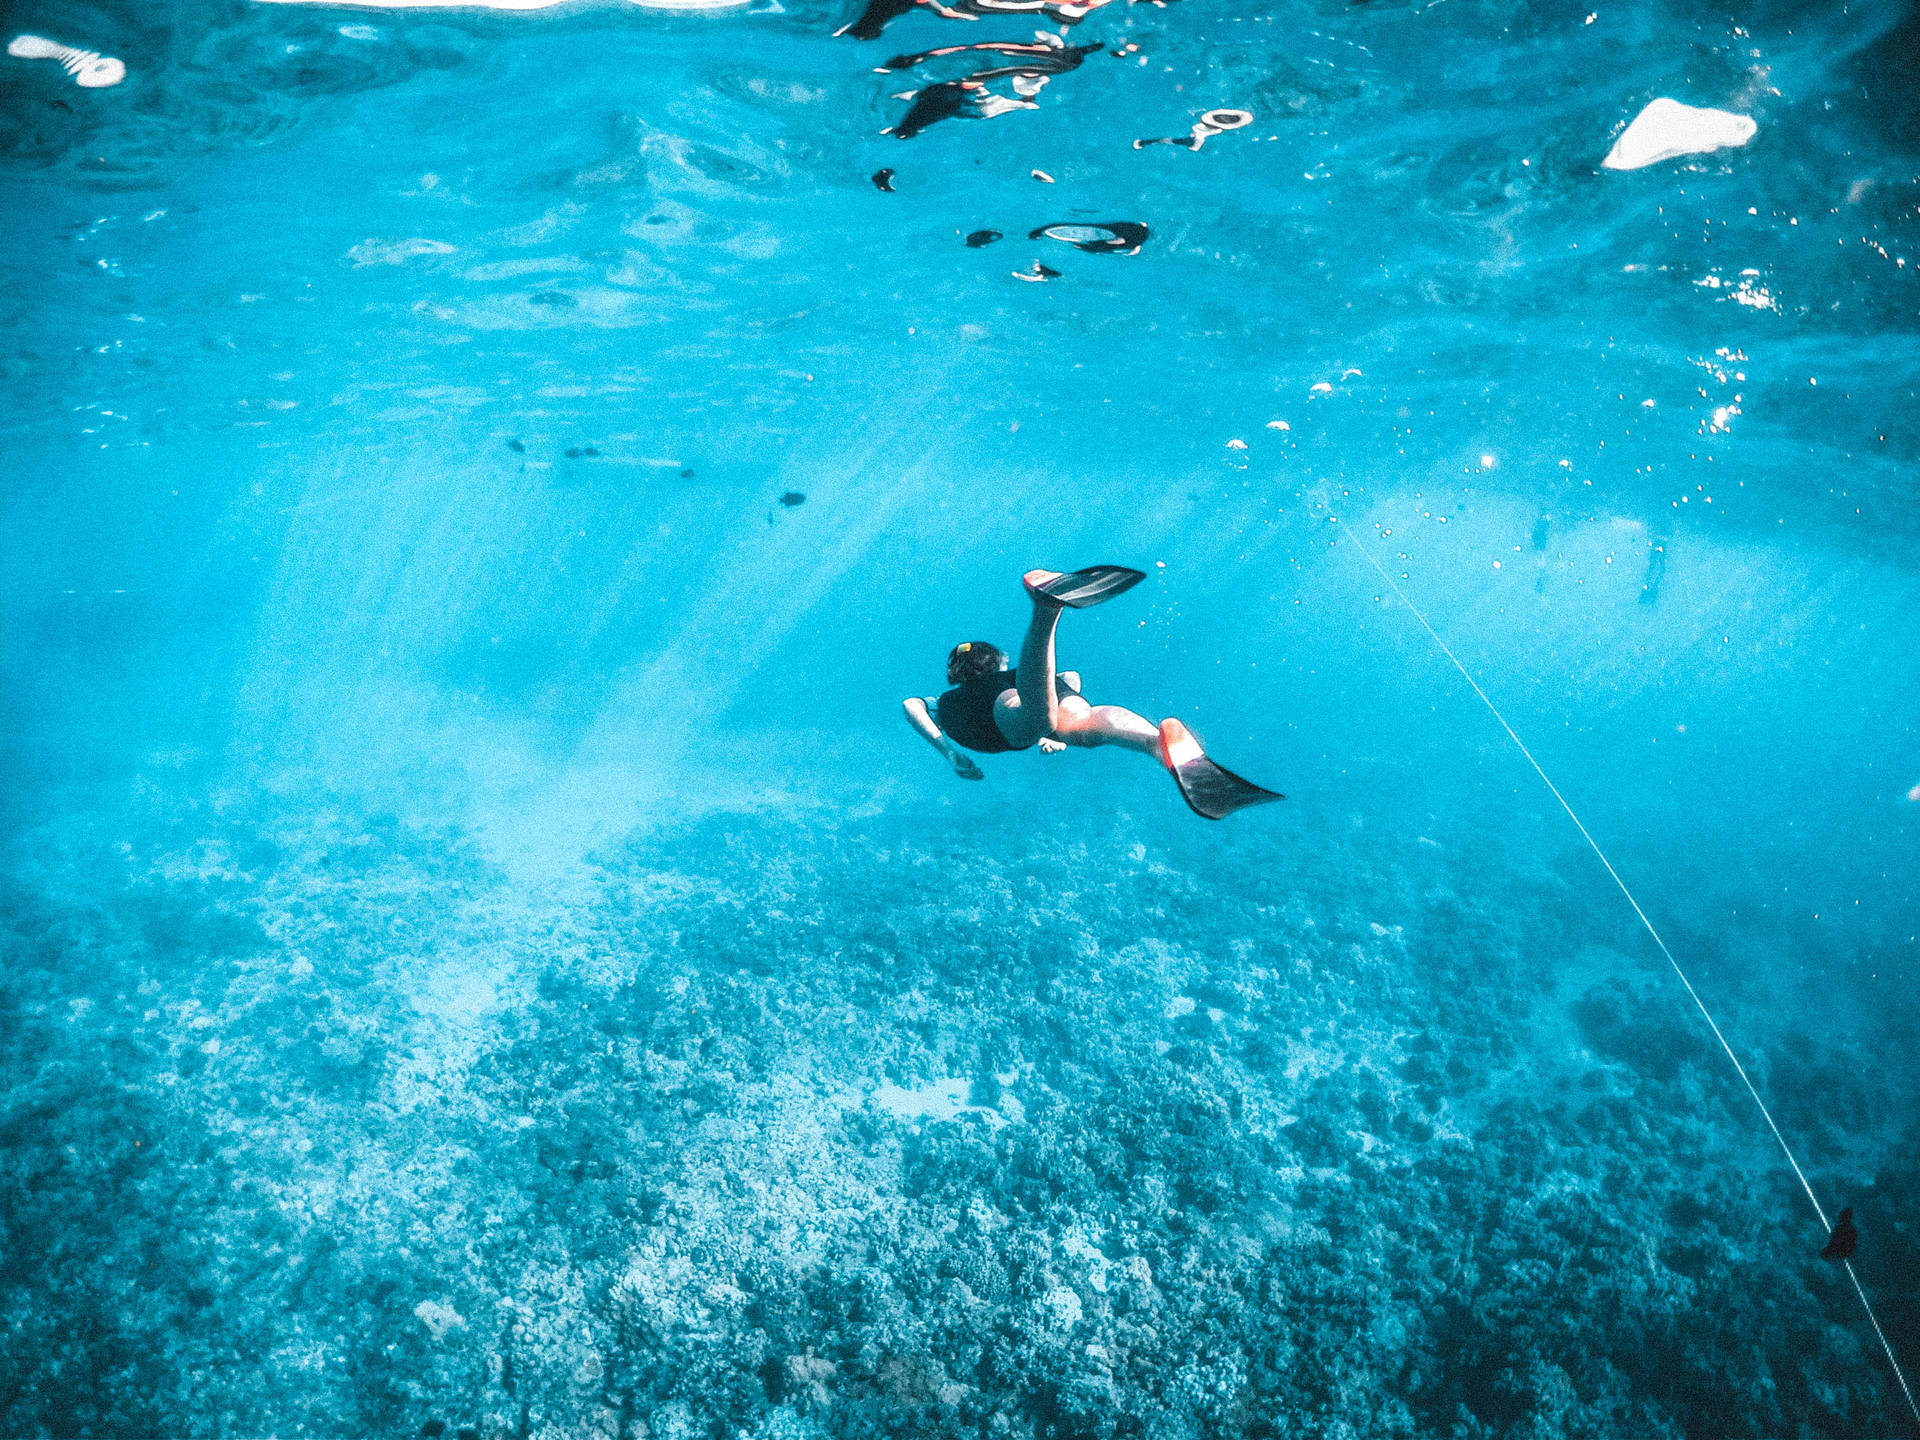 Snorkeling In Hawaii Wallpaper